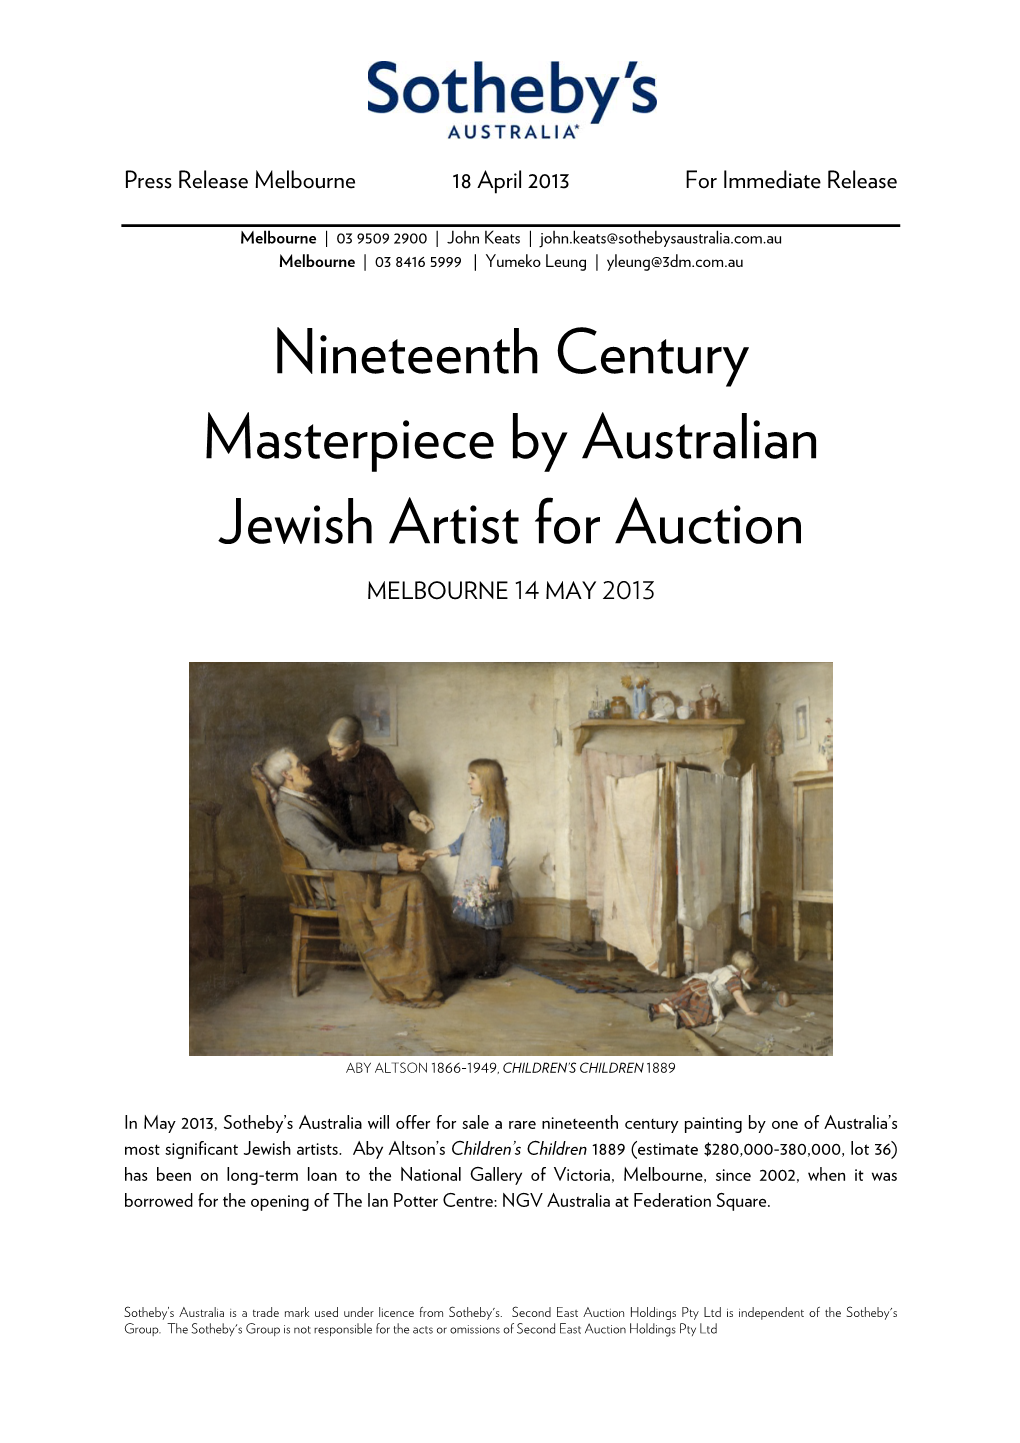 Nineteenth Century Masterpiece by Australian Jewish Artist for Auction